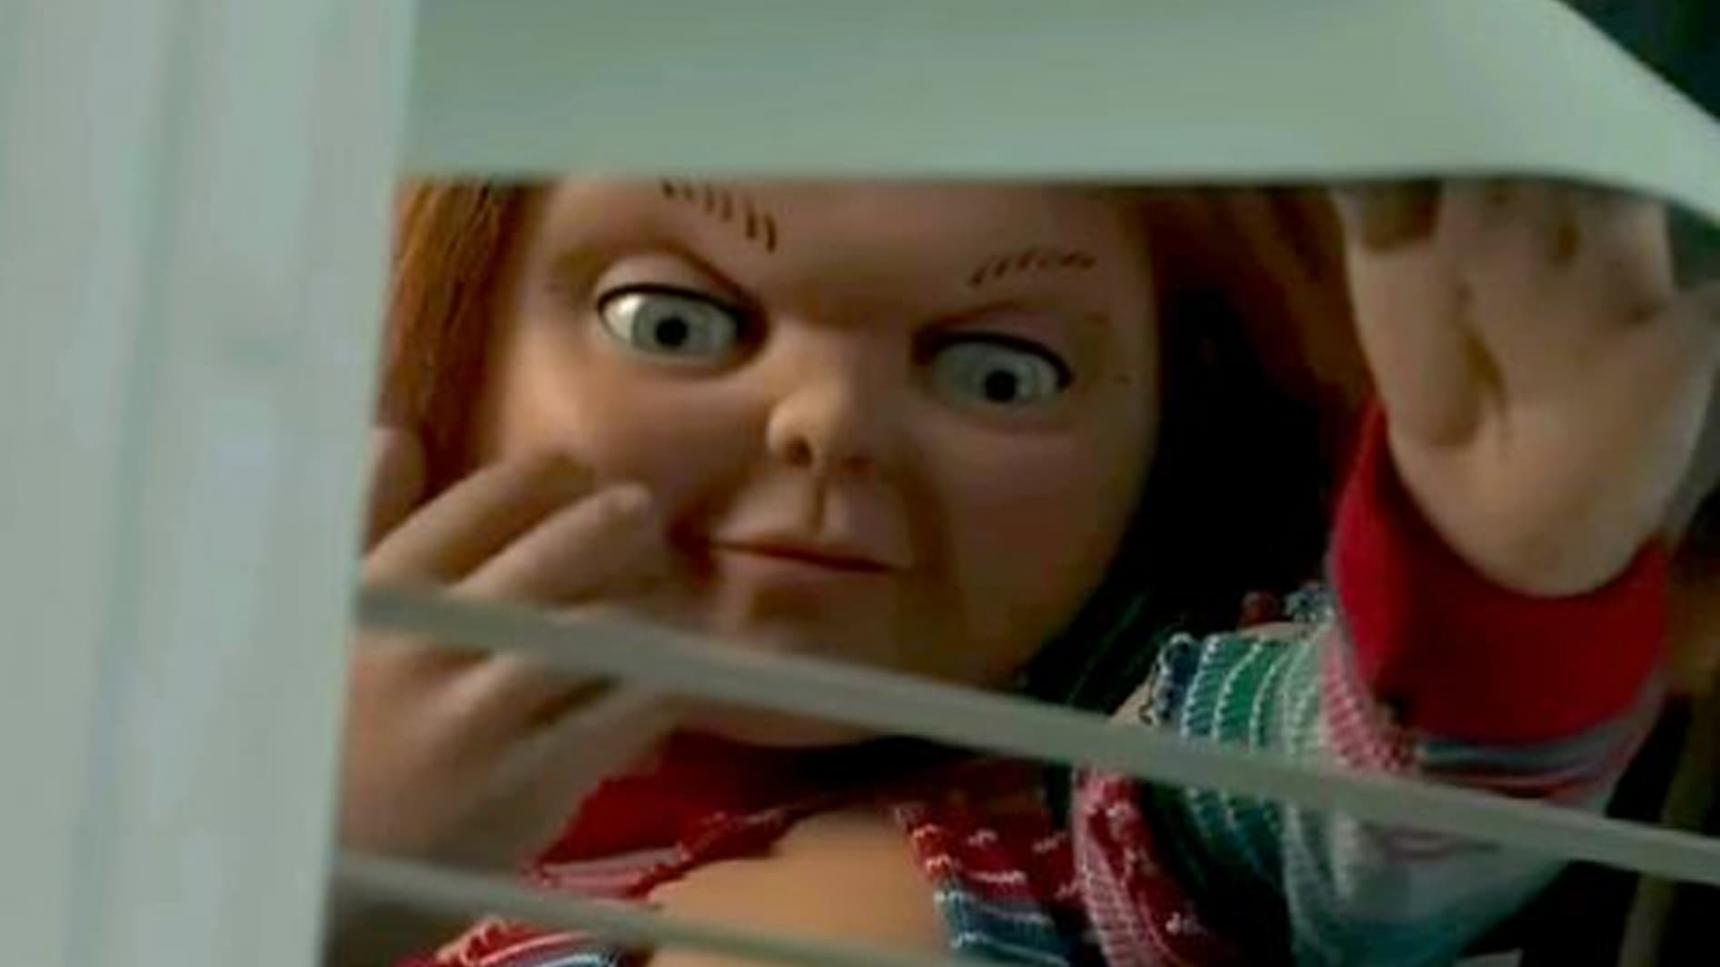 Poster del episodio 6 de Chucky online